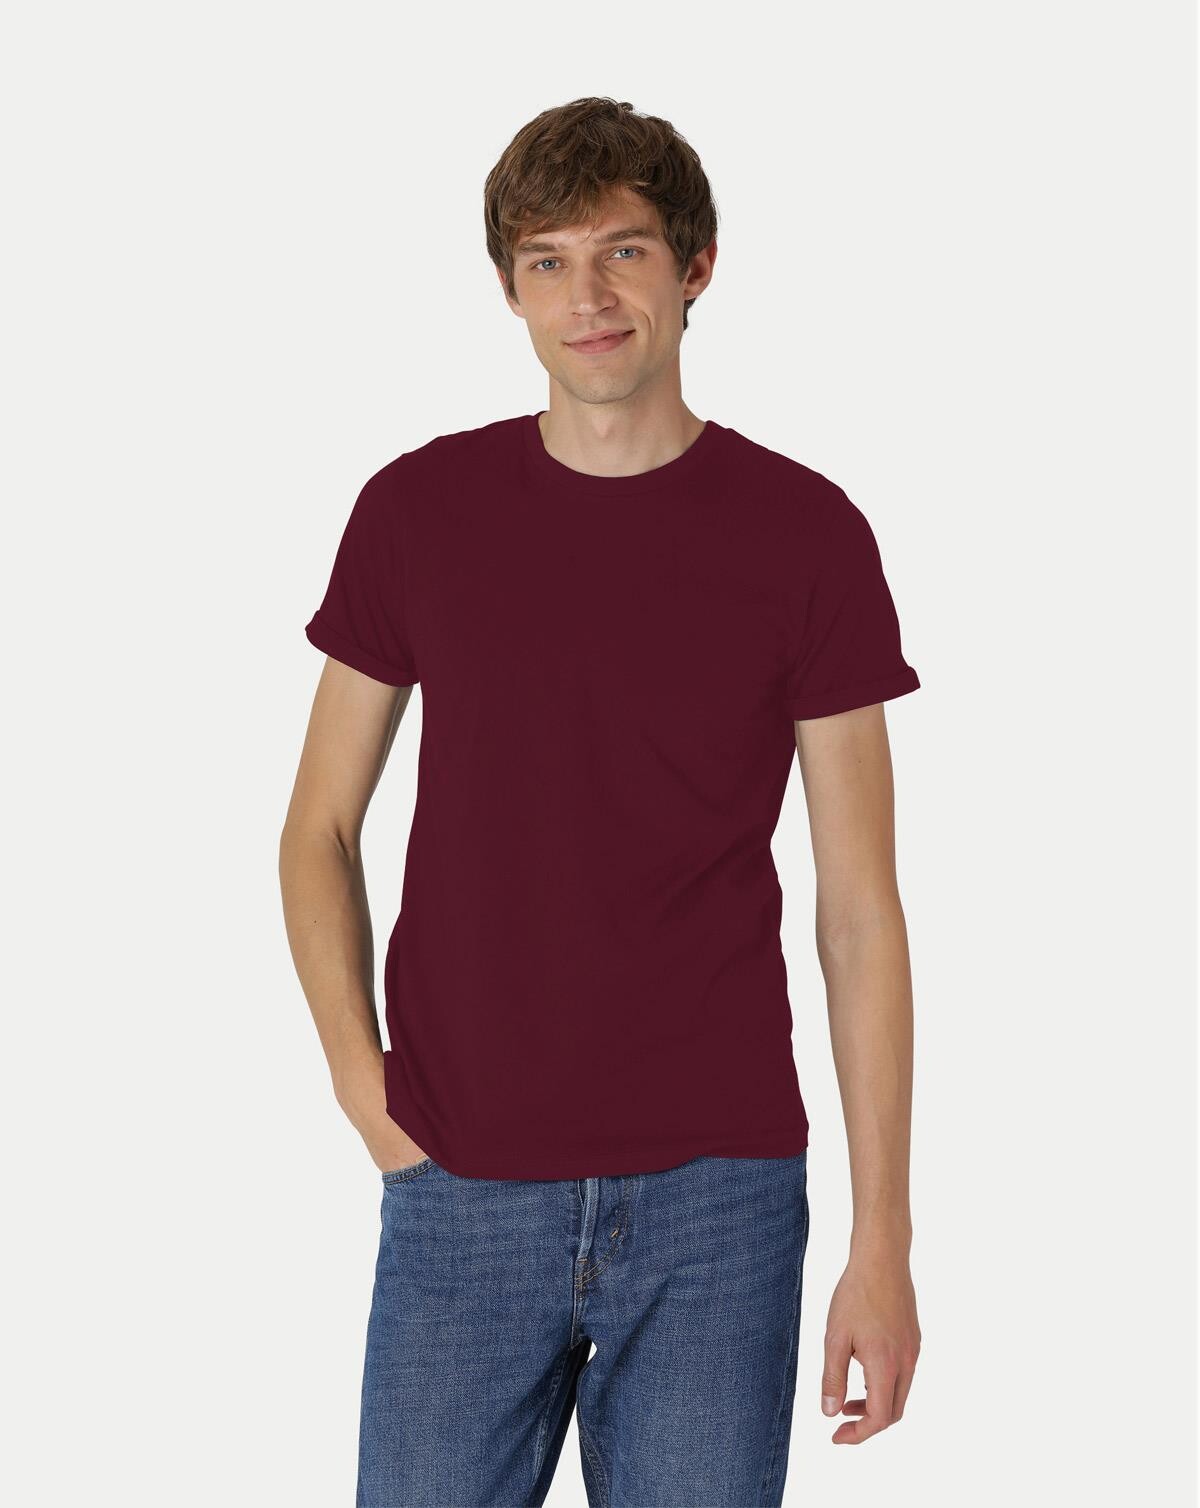 Neutral Organic - Mens Roll Up Sleeve T-shirt (Bordeaux, XL)